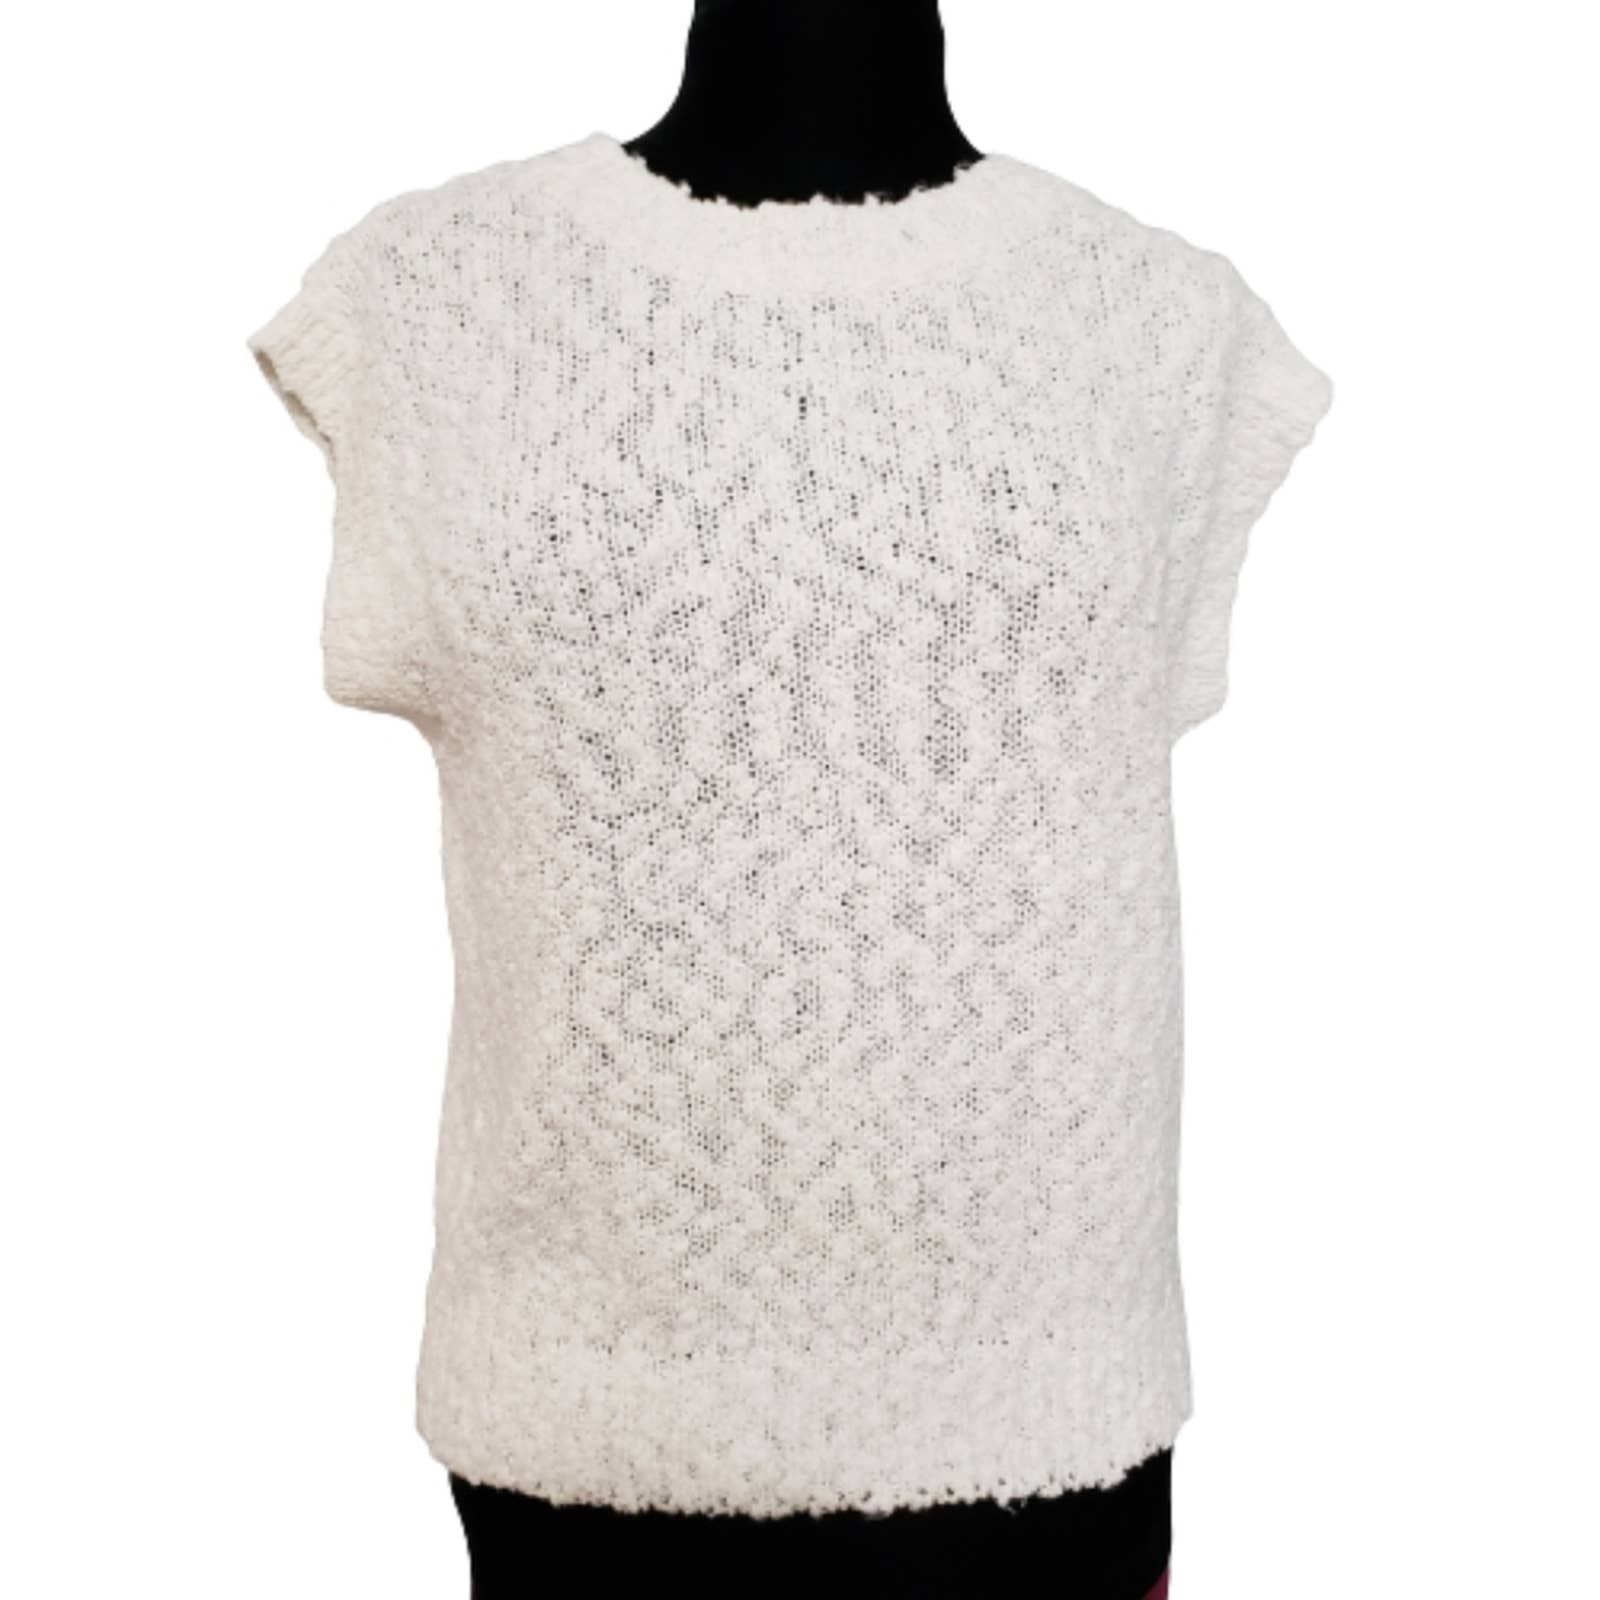 Cheap Chaus white textured knit sweater M gohtxgVSD Onl